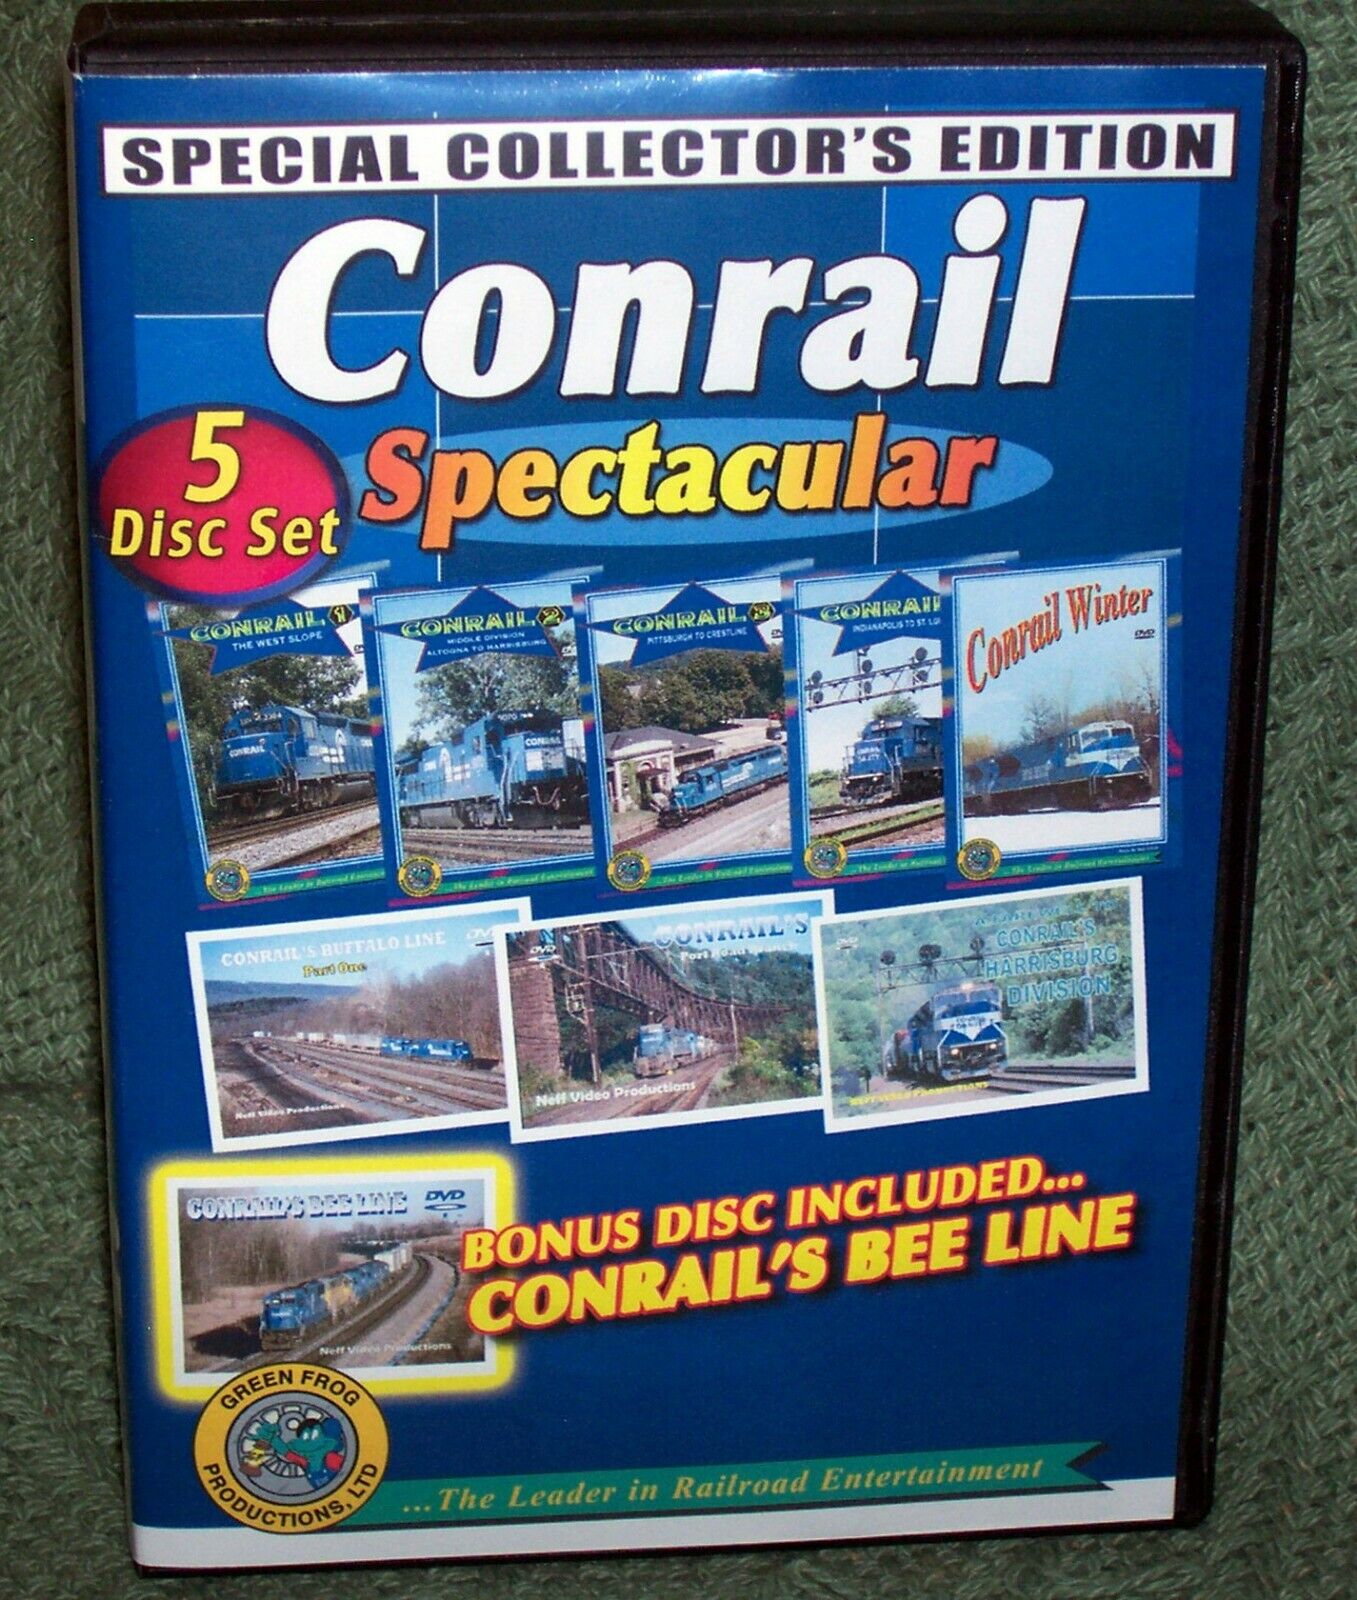 20260 DVD BOX SET CONRAIL SPECTACULAR COLLECTION 